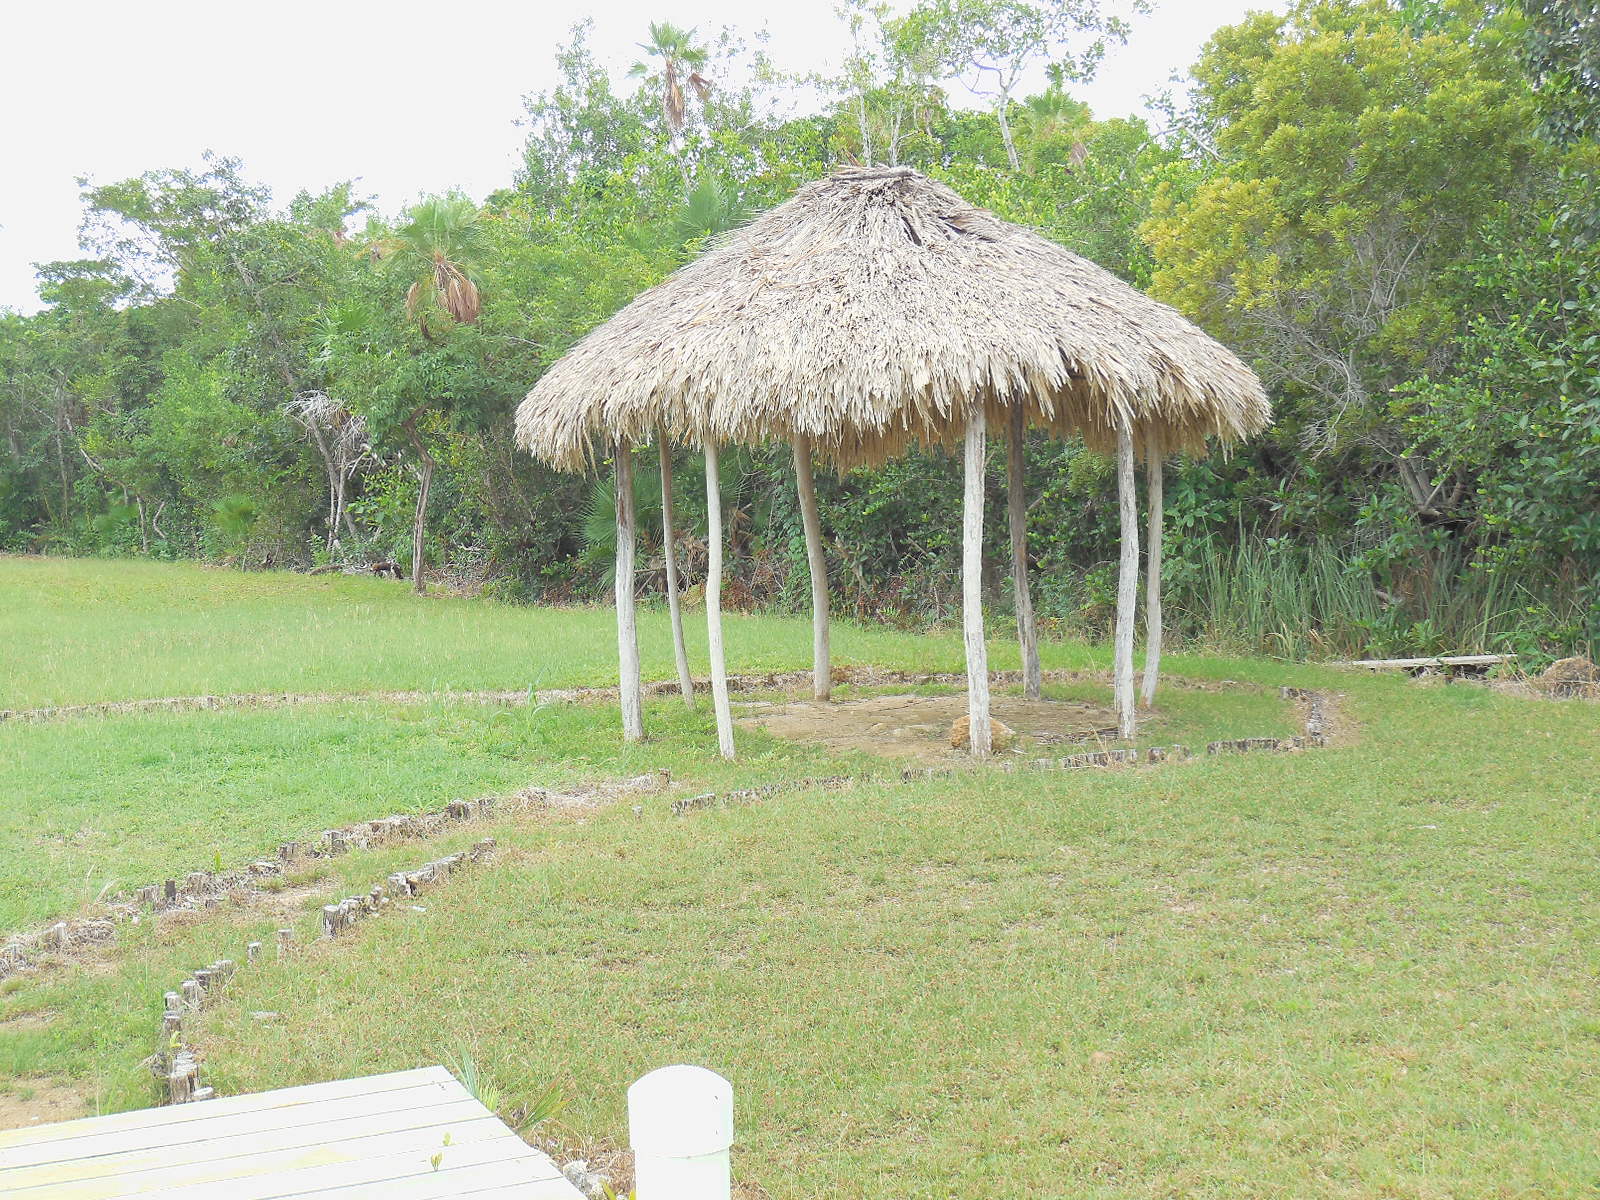 Sunset Villas, a Belize Waterfront Community